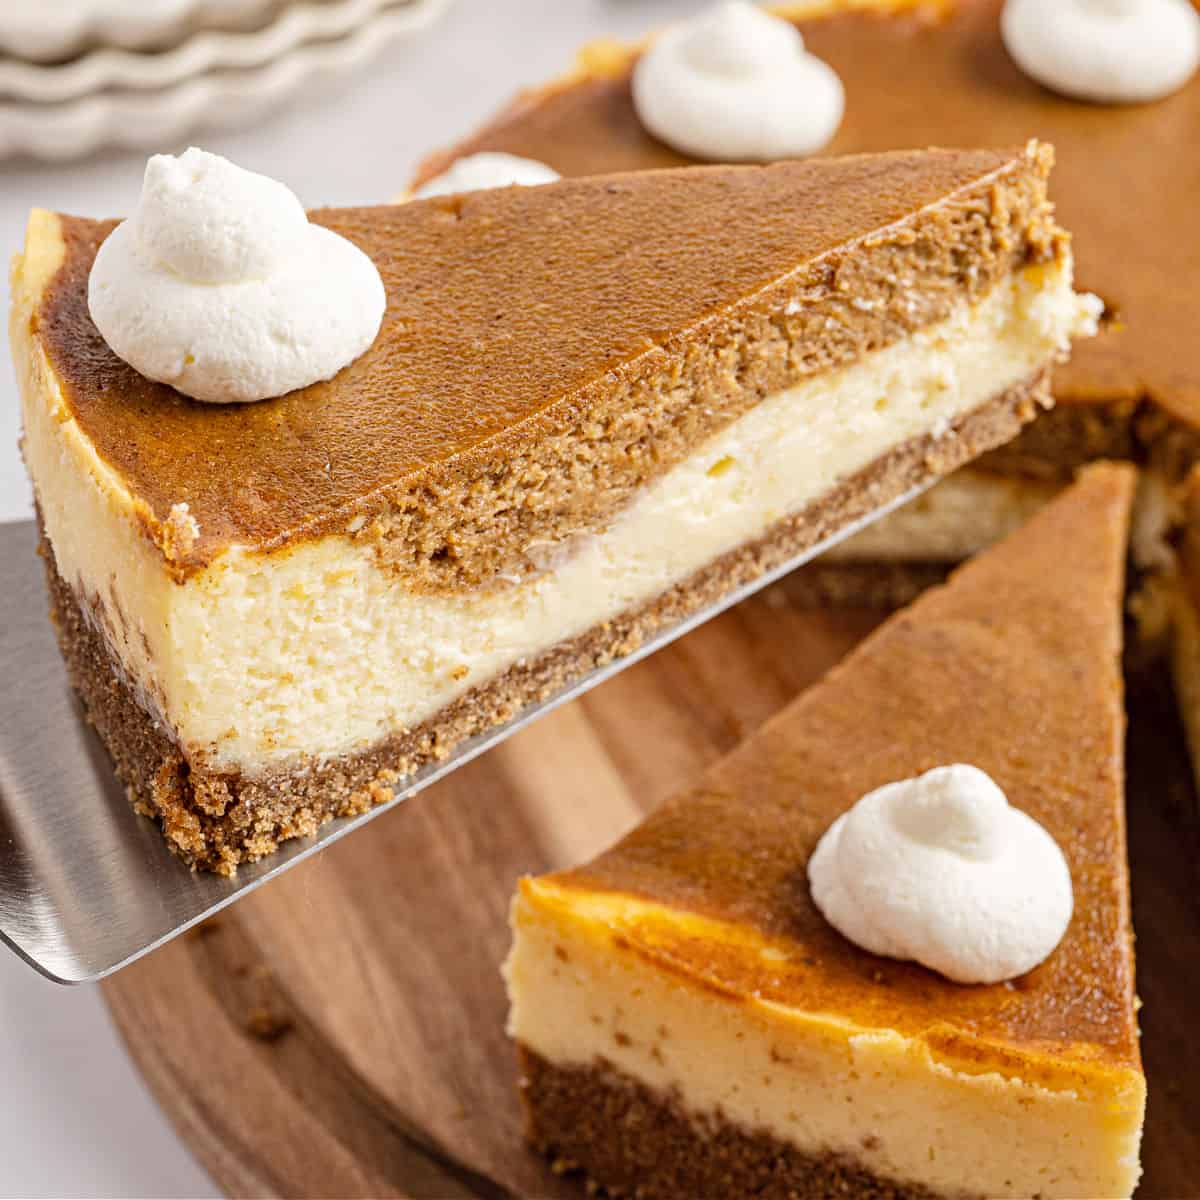 https://www.shugarysweets.com/wp-content/uploads/2019/10/pumpkin-pie-cheesecake-recipe.jpg